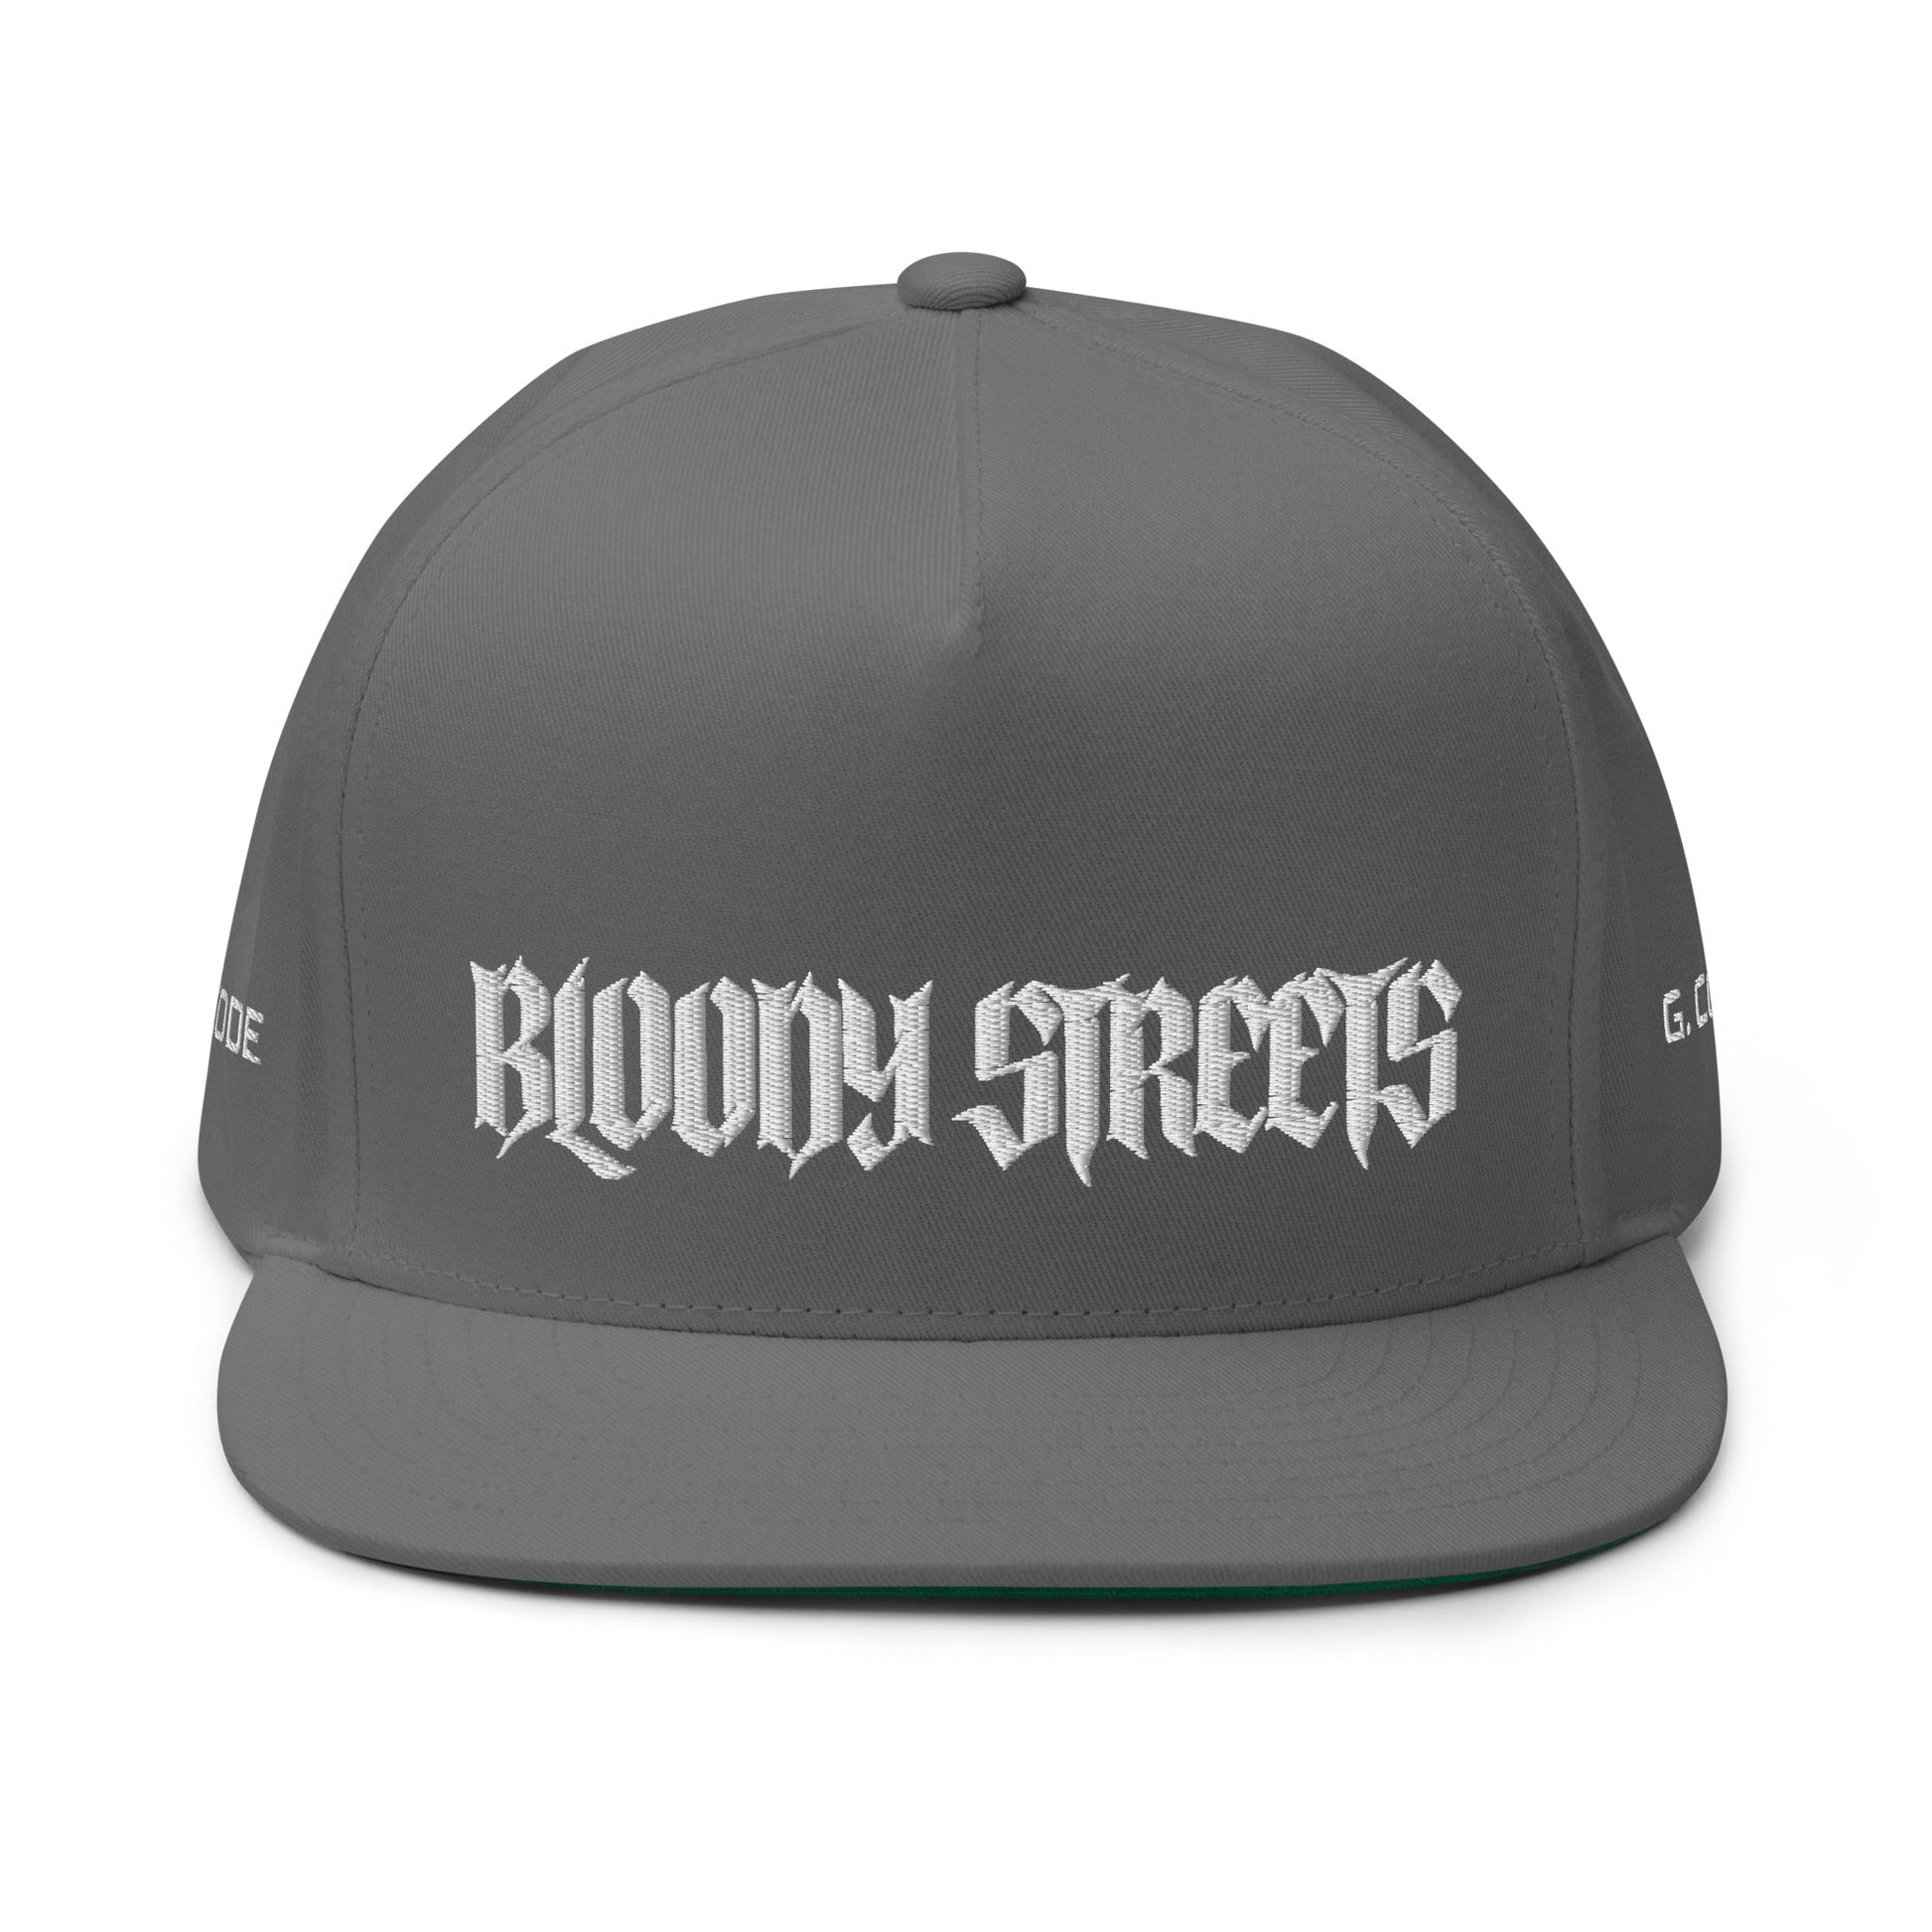 Bloody Streets Crew Flat Bill Gray - BLOODY-STREETS.DE Streetwear Herren und Damen Hoodies, T-Shirts, Pullis